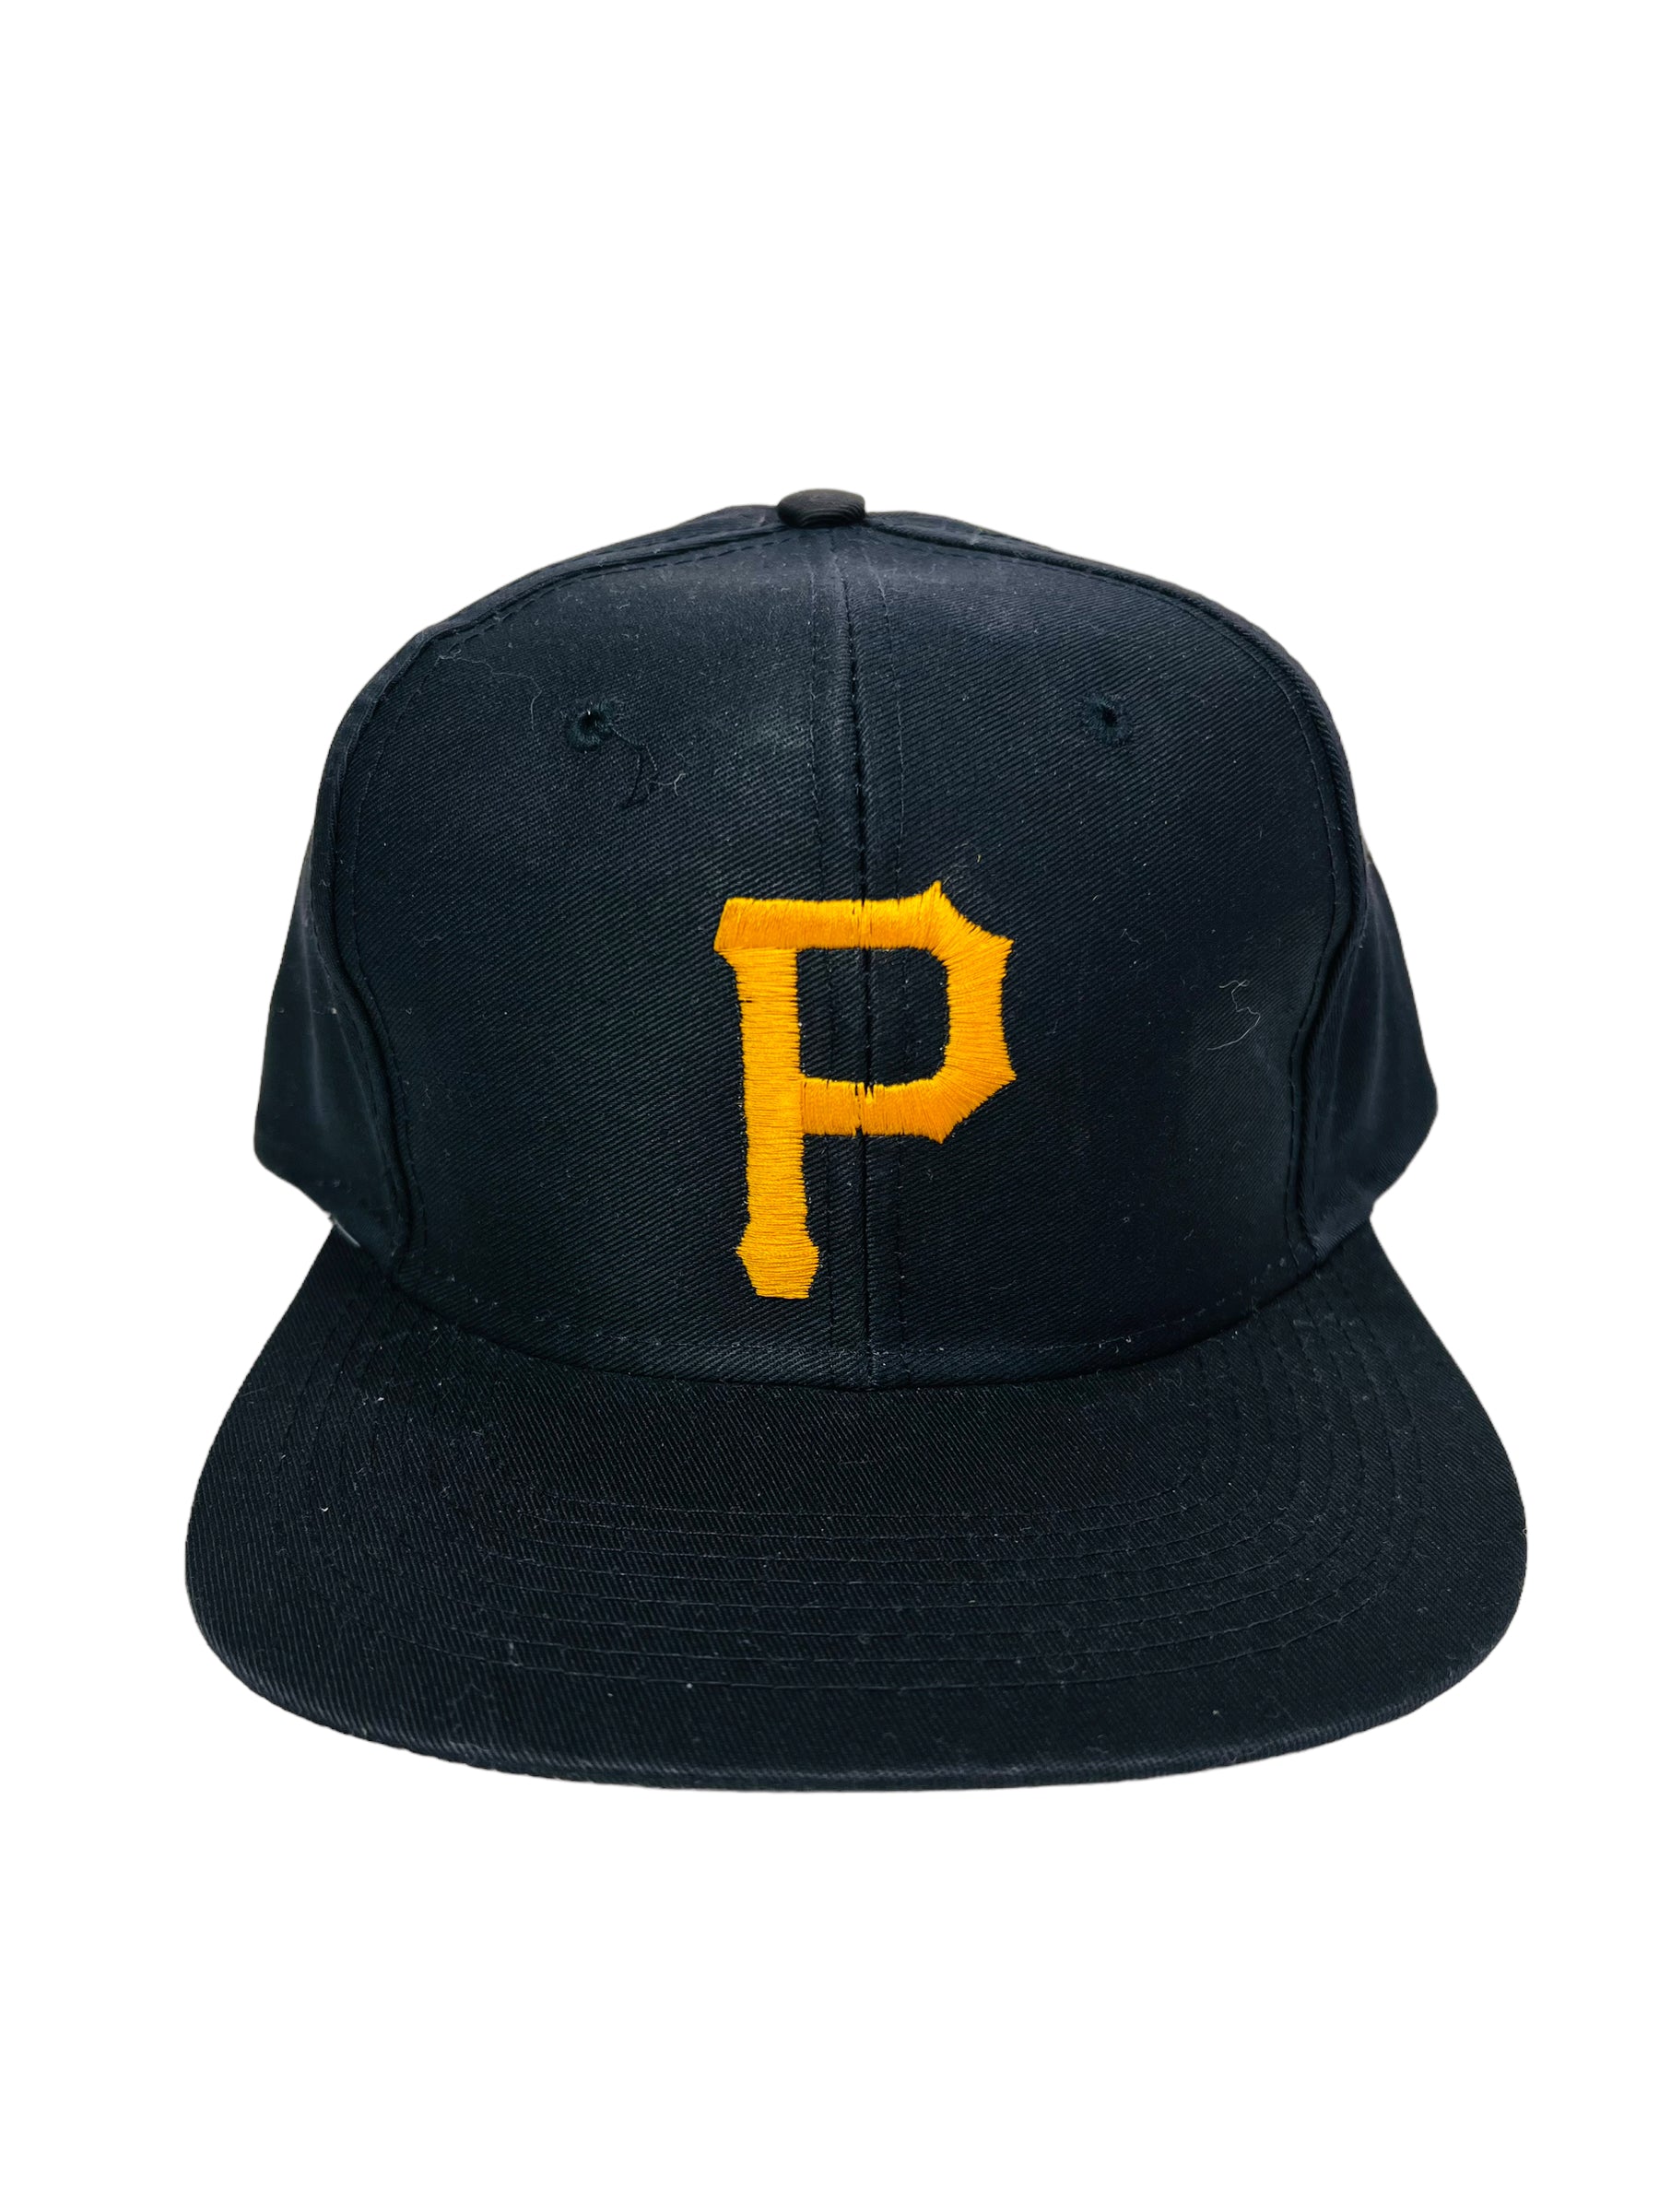 Vintage Pittsburgh Pirates Sports Specialties Snapback